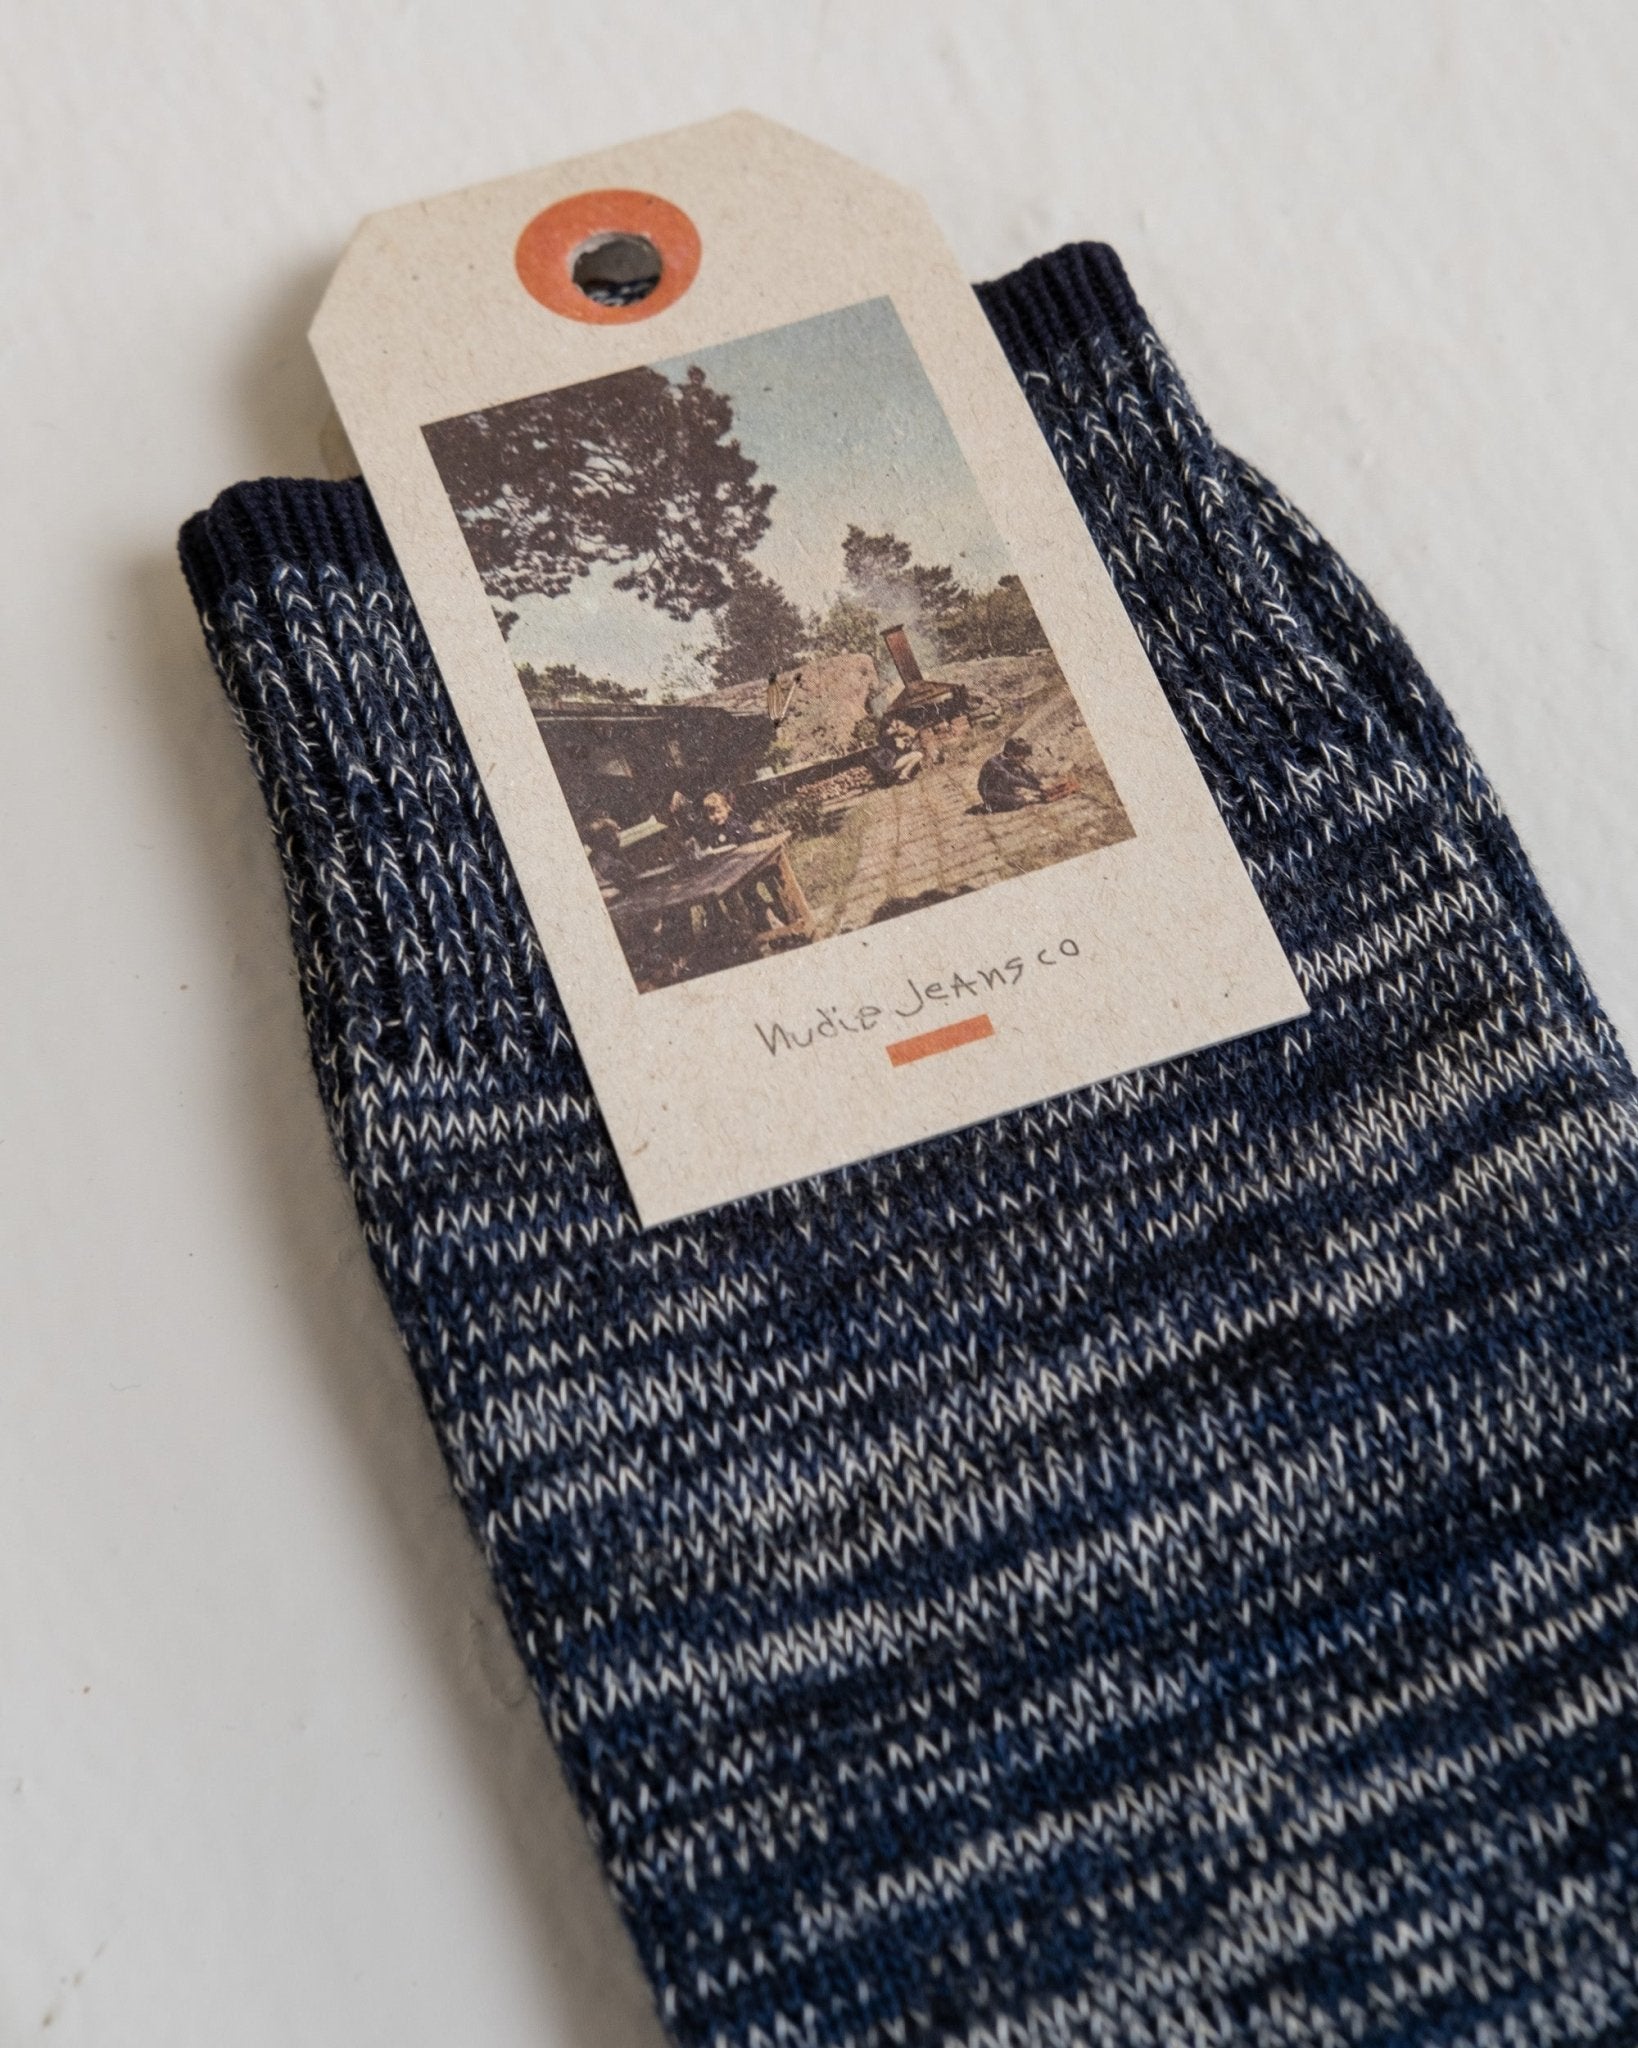 Rasmusson Multi Yarn Socks Navy - Meadow